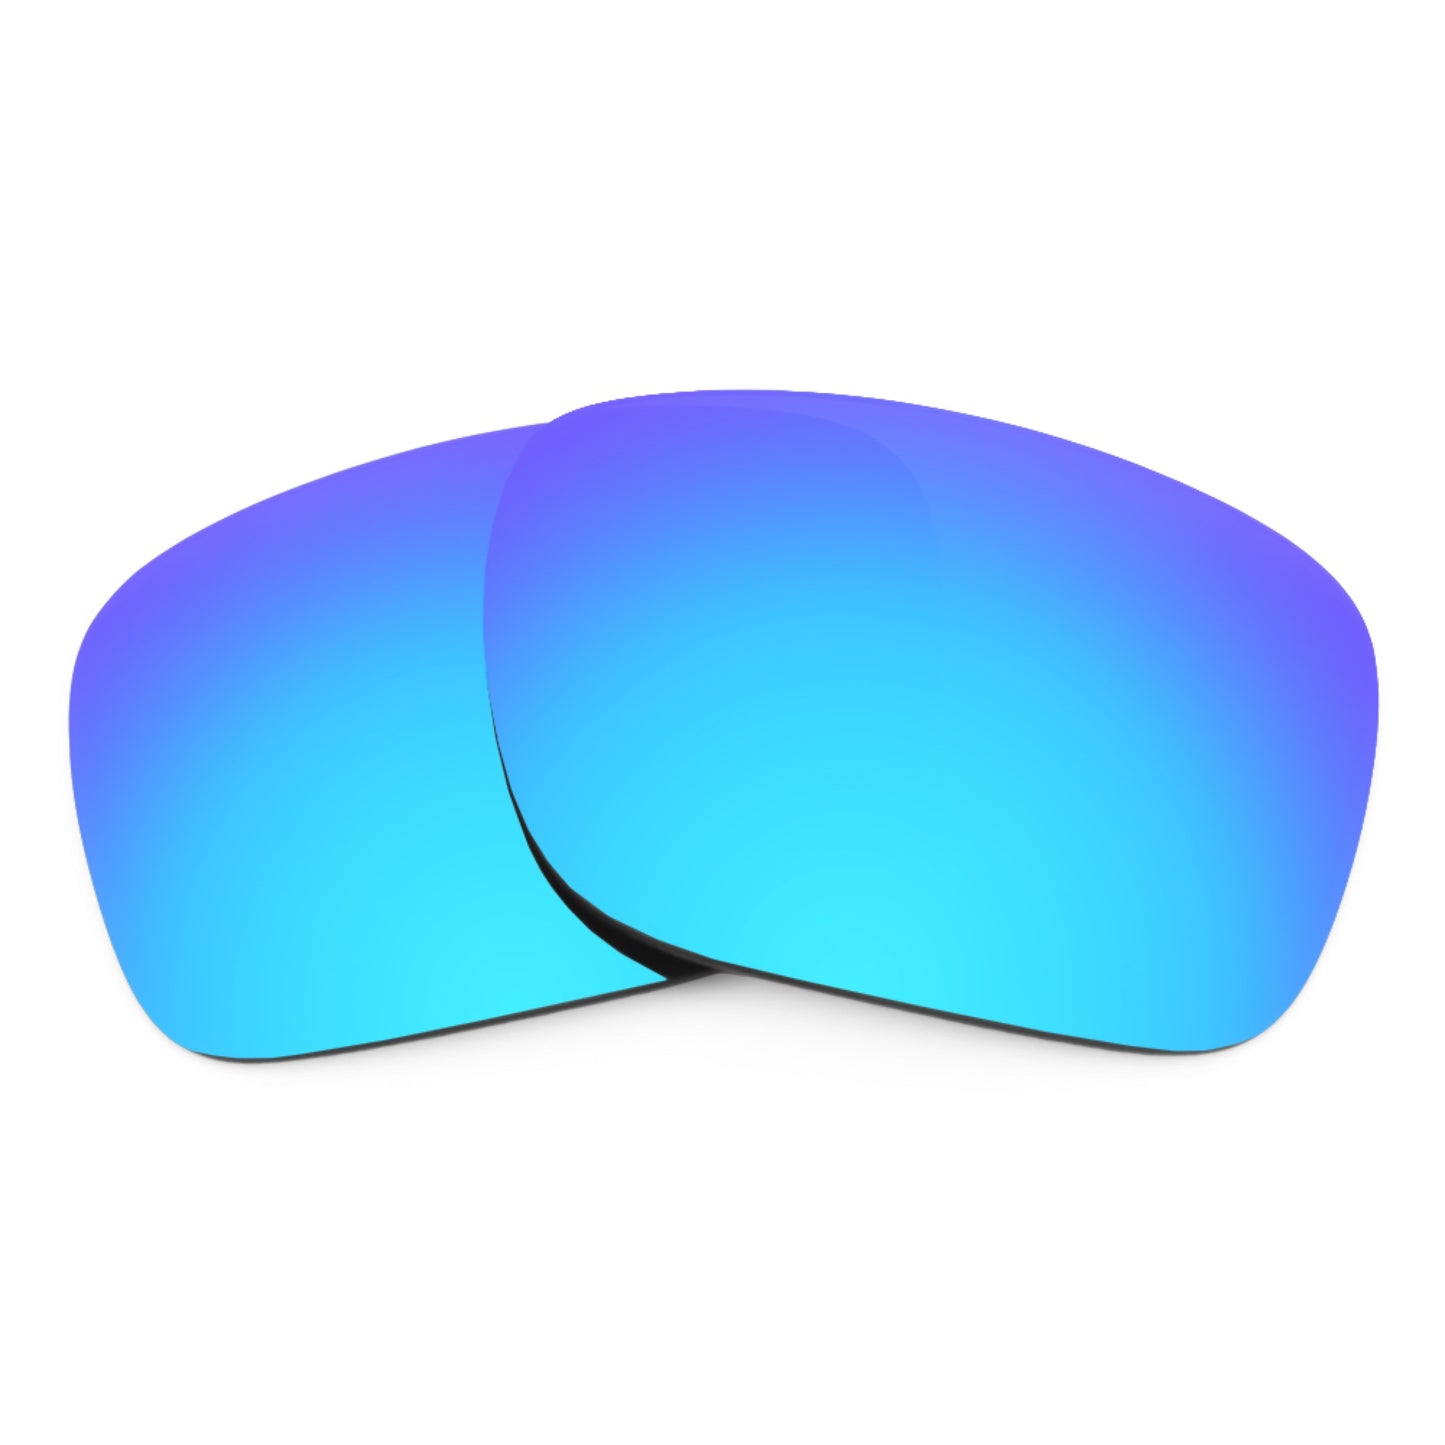 Revant replacement lenses for Spy Optic Montana (Low Bridge Fit) Non-Polarized Ice Blue